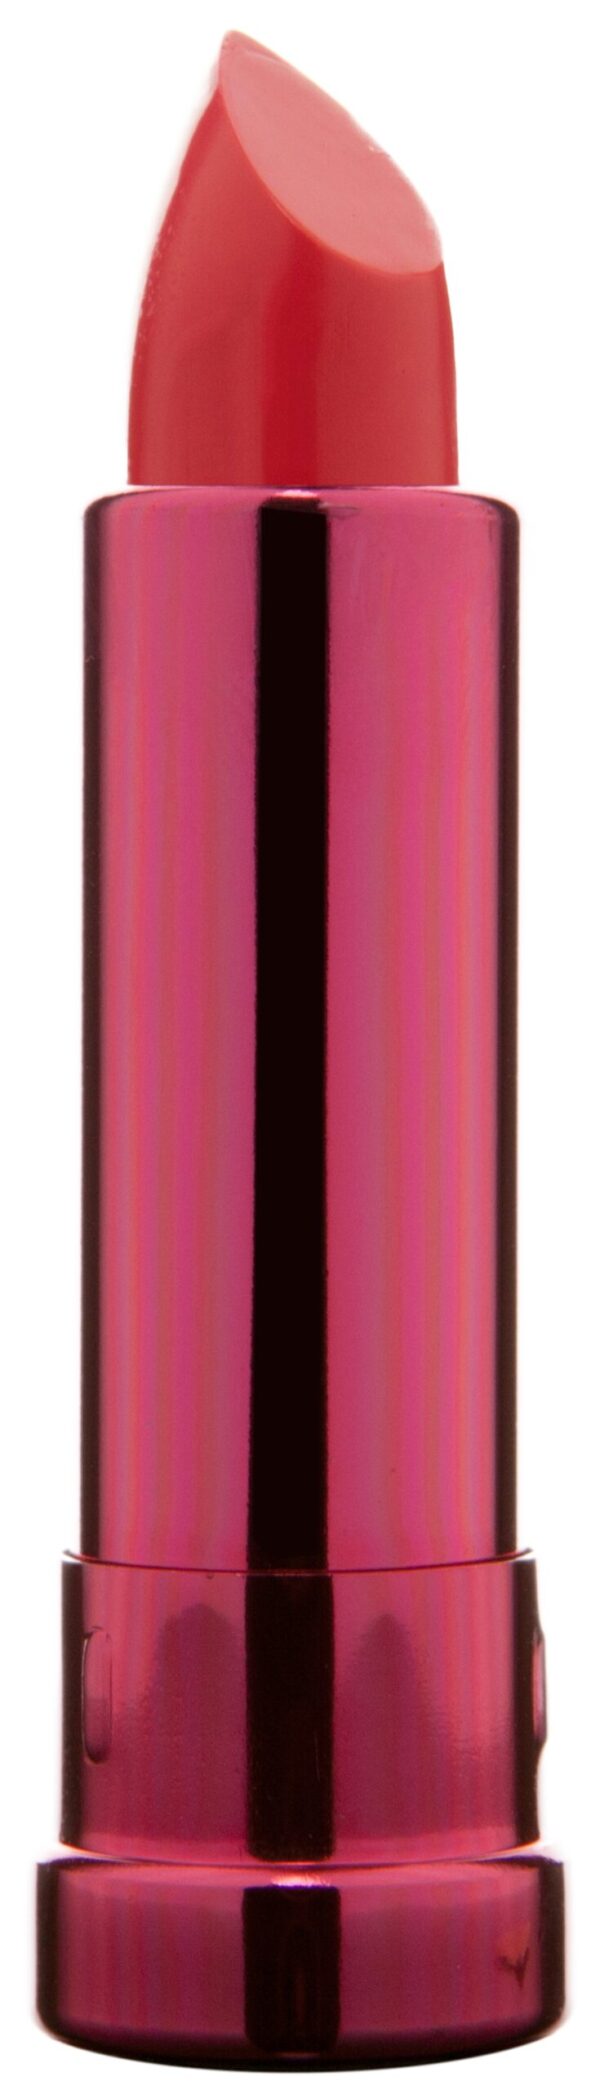 100% Pure Fruit Pigmented Pomegranate Oil Anti Aging Lipstick: Primrose - 4.5g